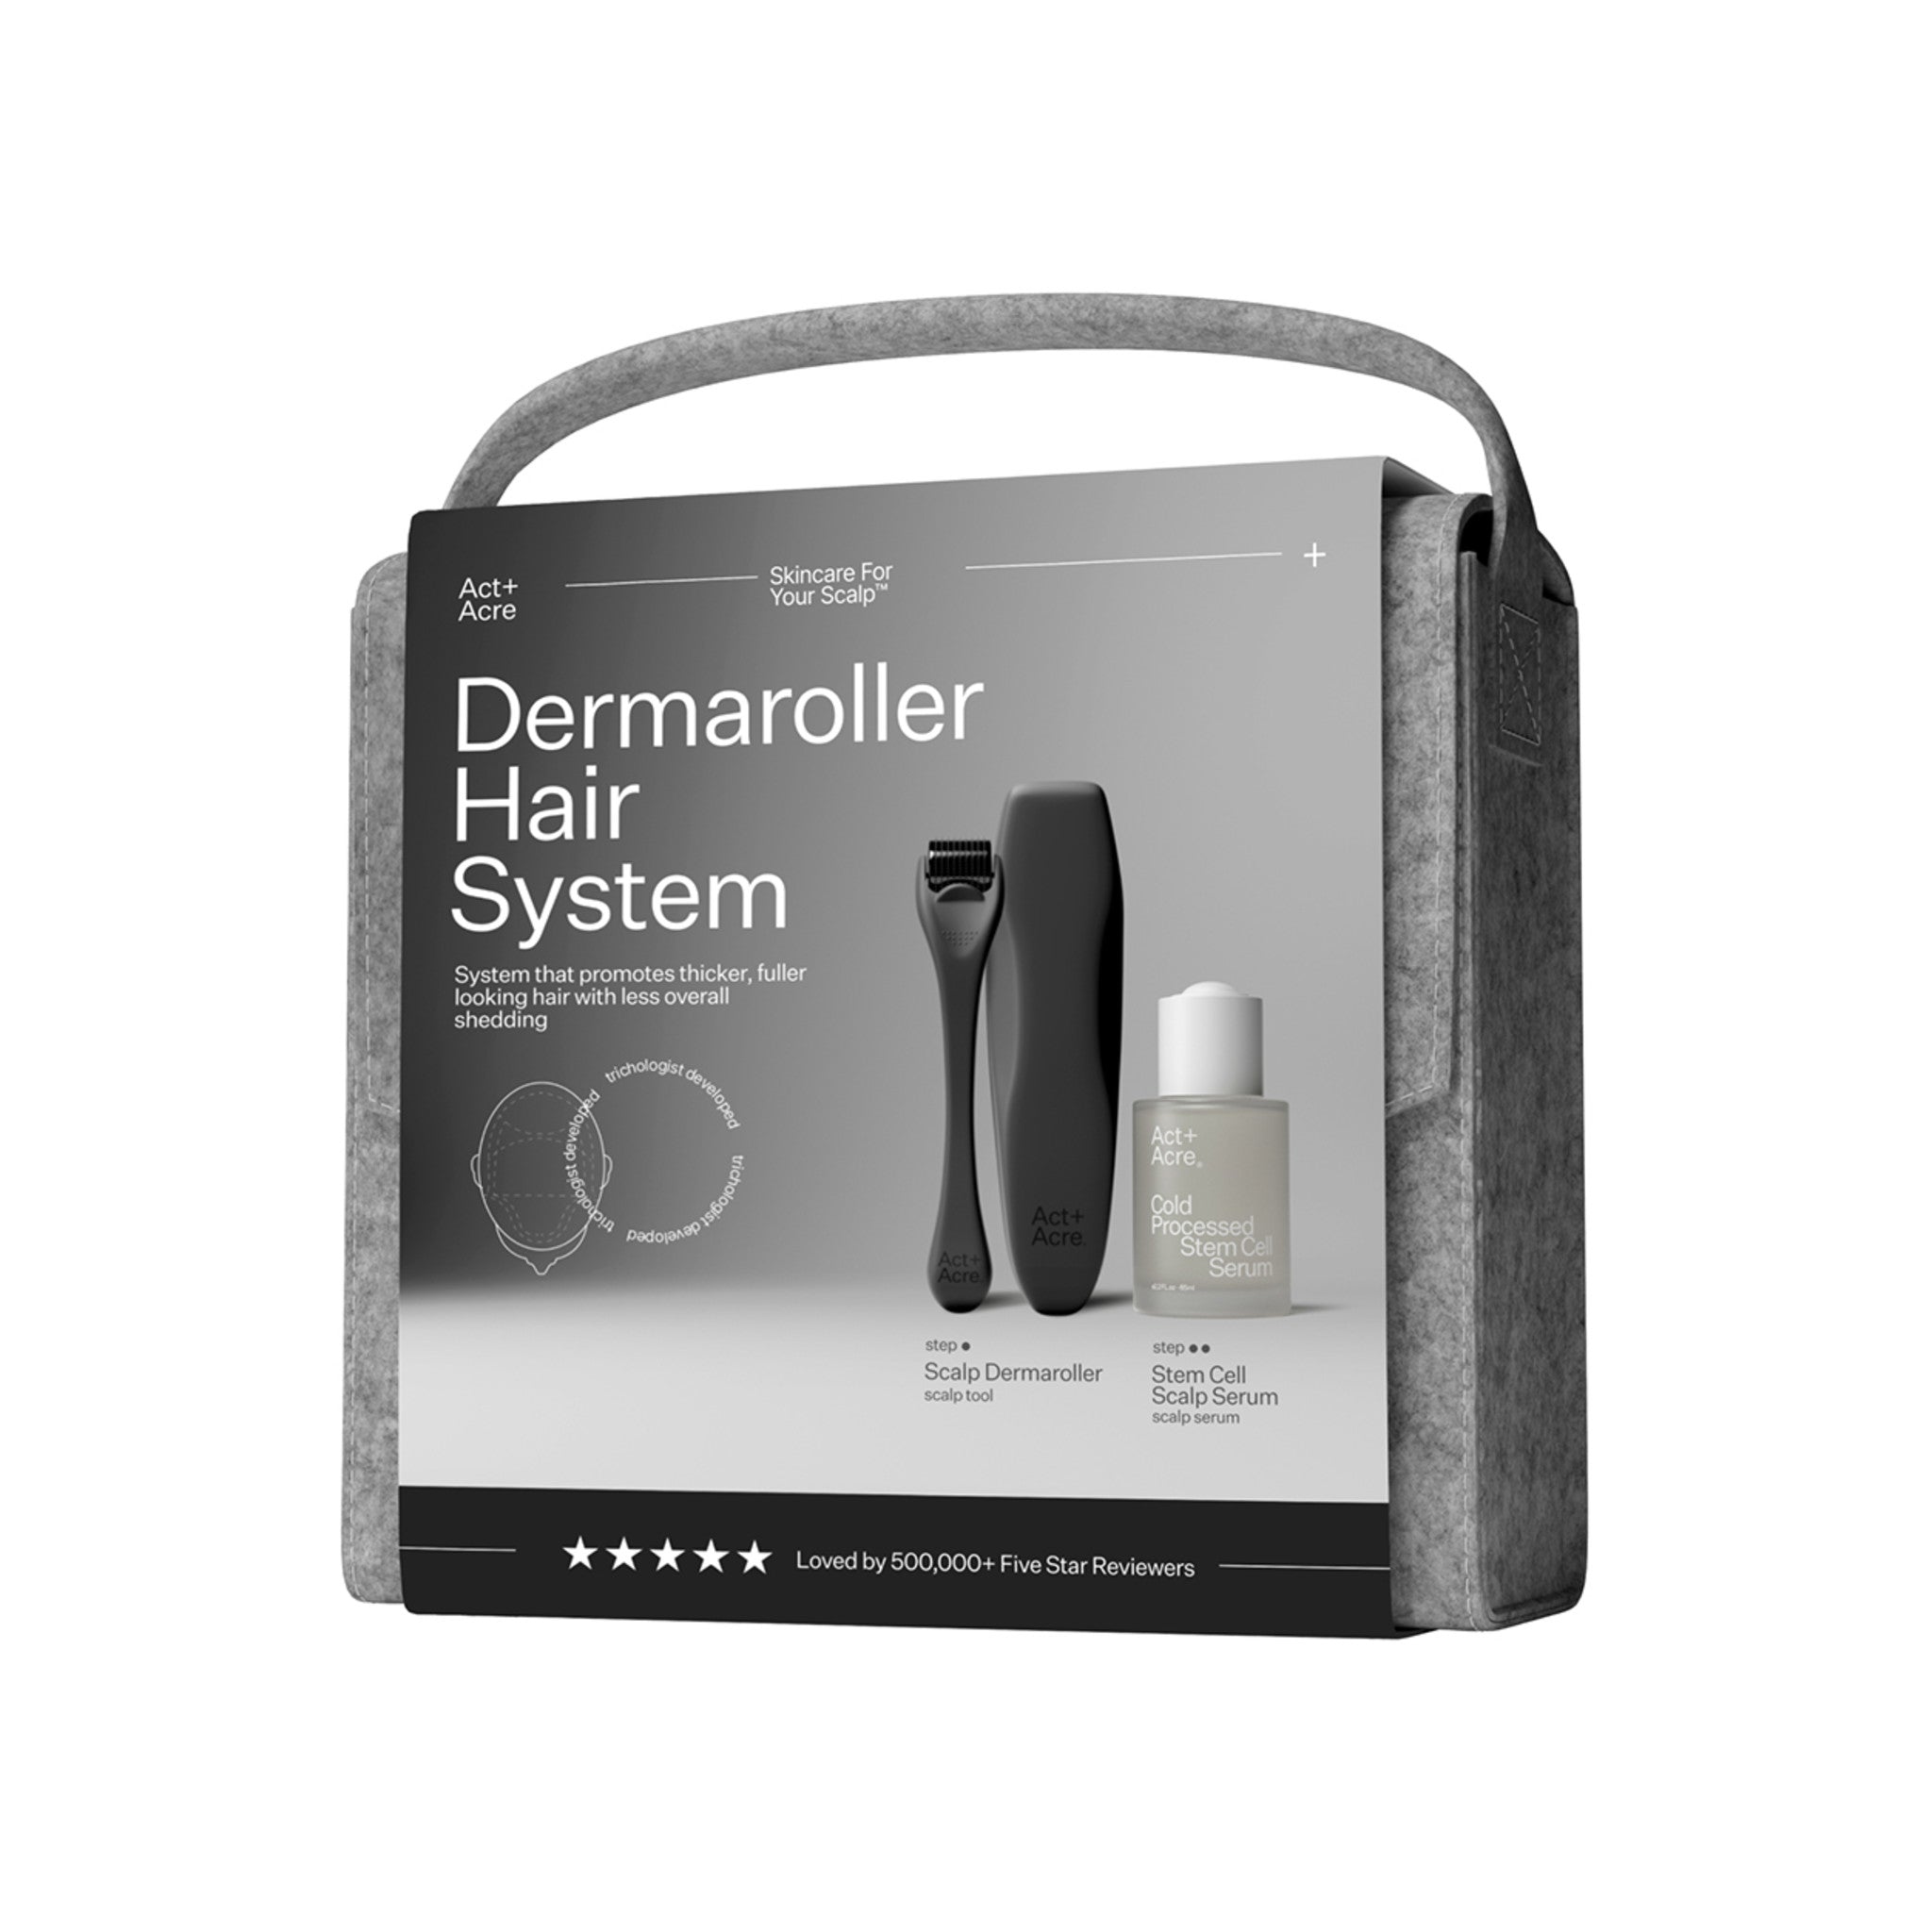 Dermaroller Hair System main image.